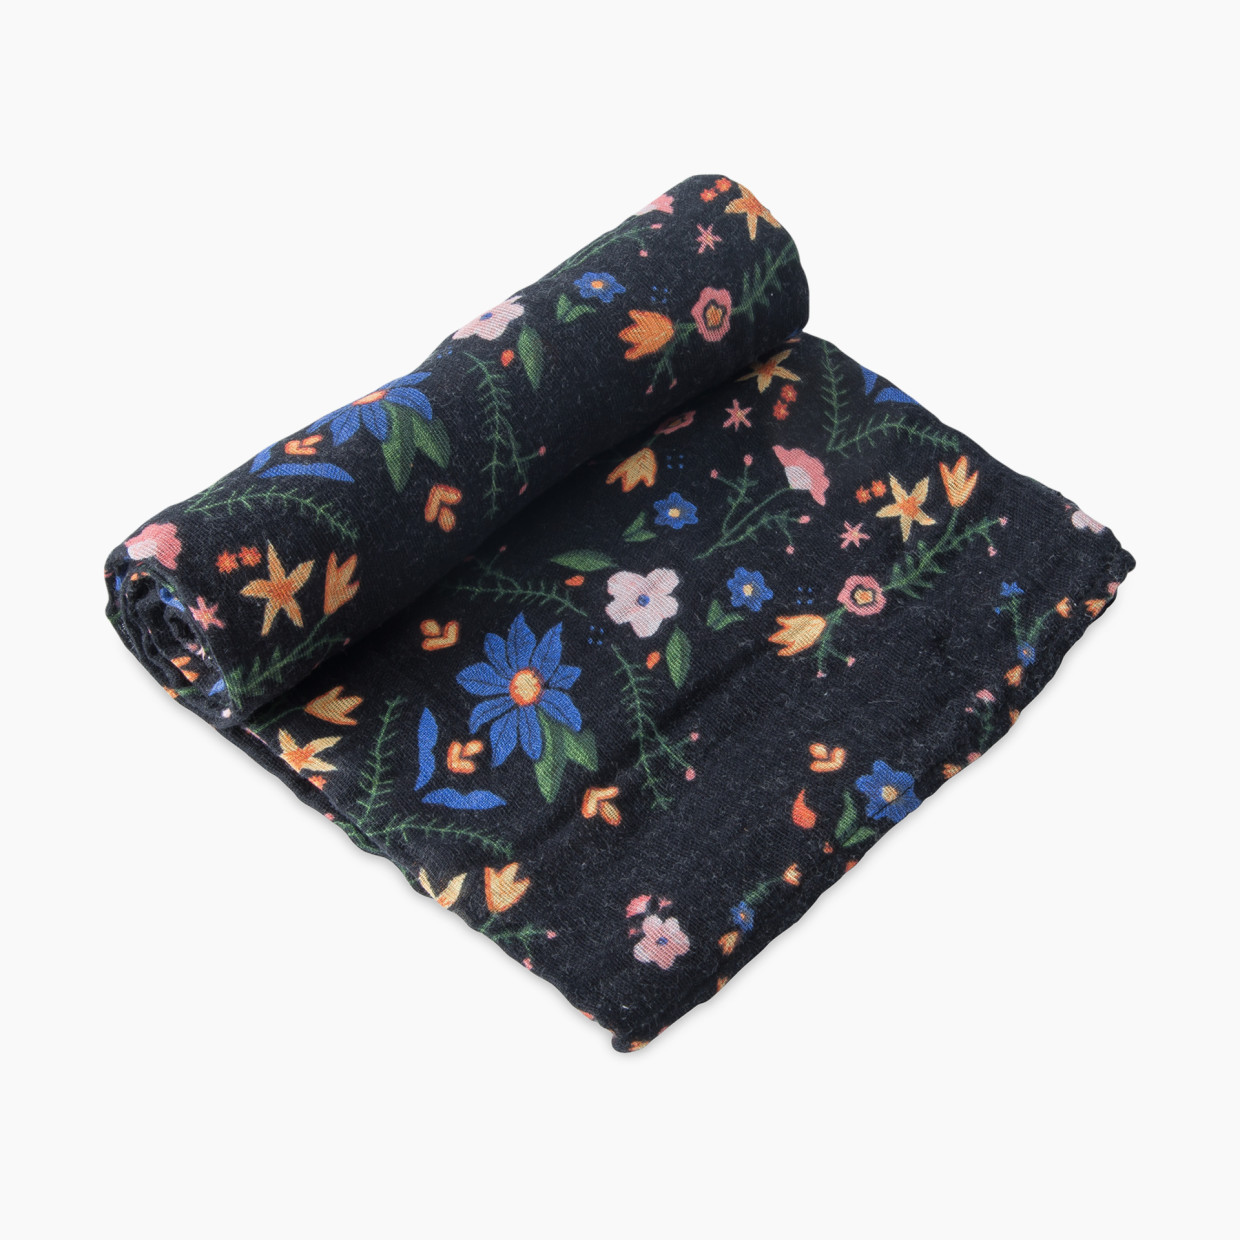 Little Unicorn Cotton Muslin Swaddle Blanket - Floral Stitch.